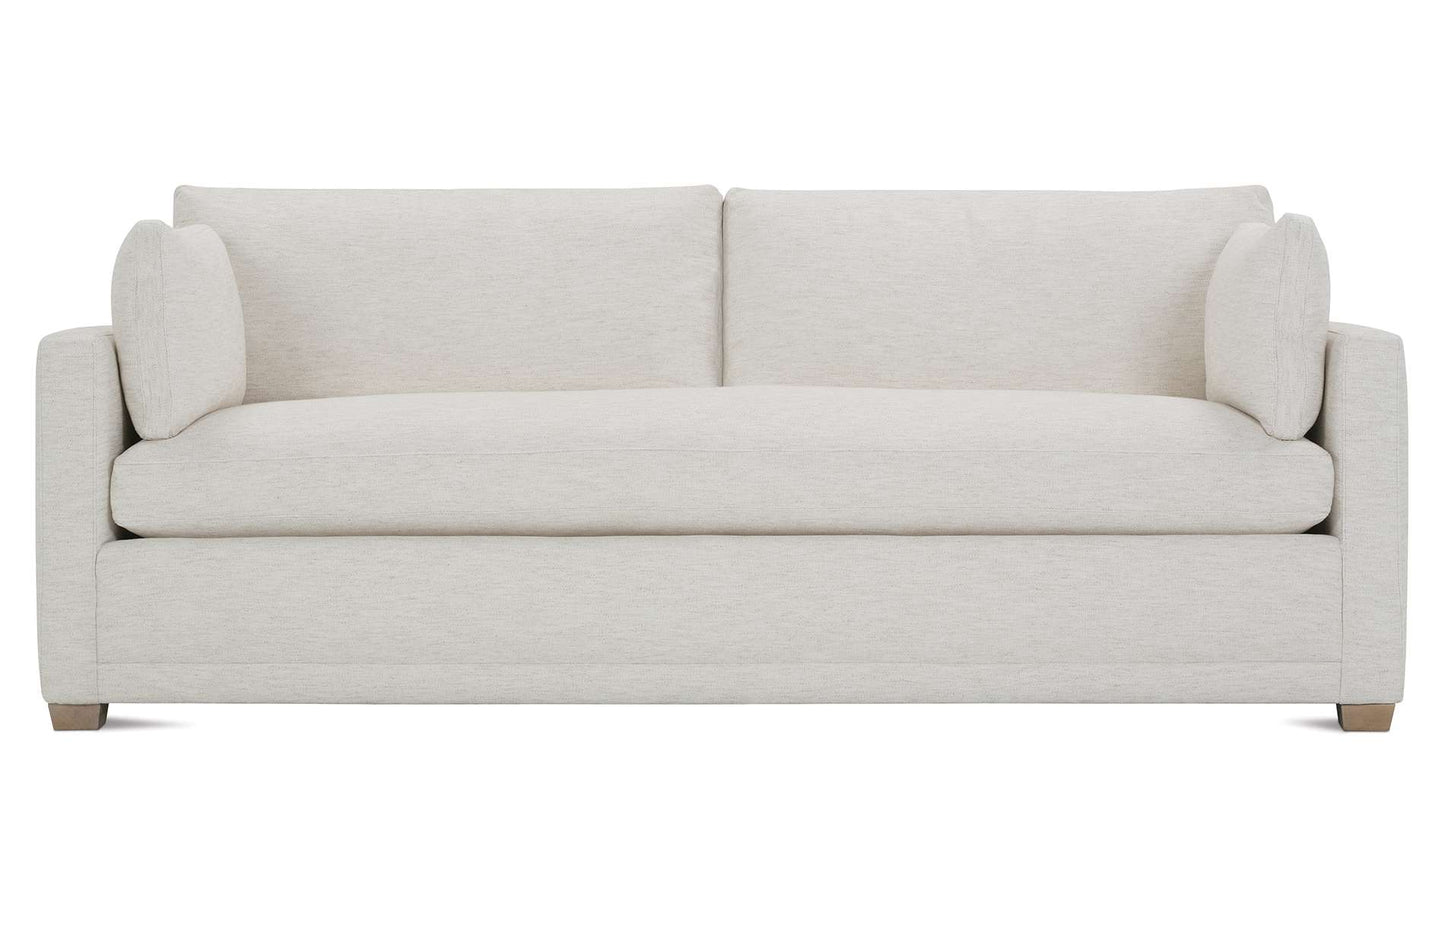 SYLVIE-022 88" Sofa w/ Bench Cushion in 102CR-19 Fabric